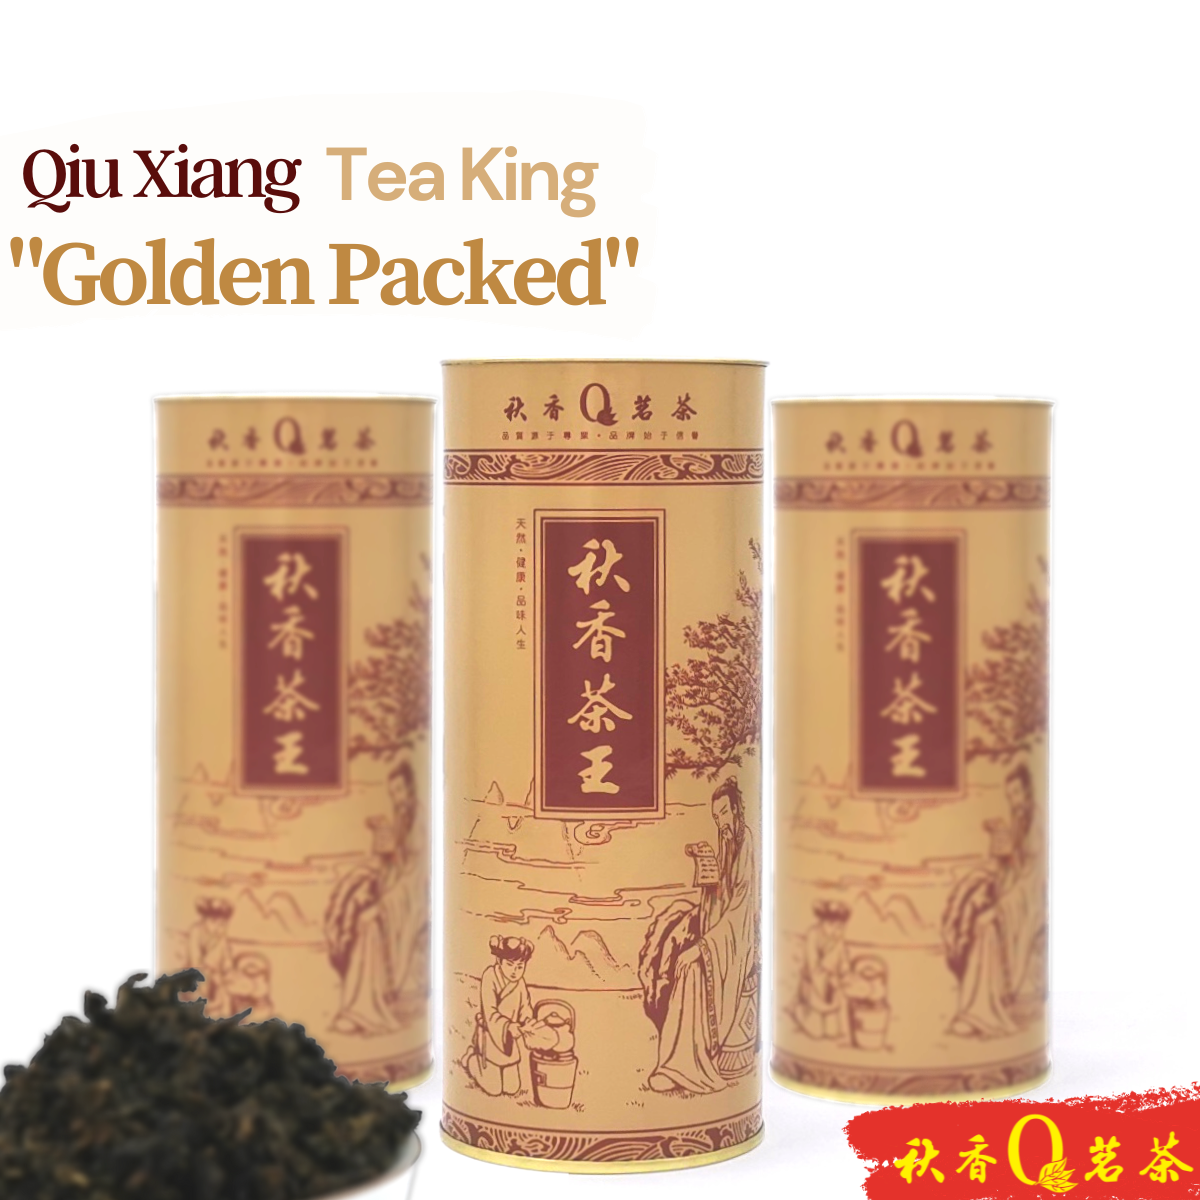 秋香茶王金庄 Qiu Xiang Tea King "Golden Pack" 【150g/ 300g】|【铁观音 Tie Guan Yin】